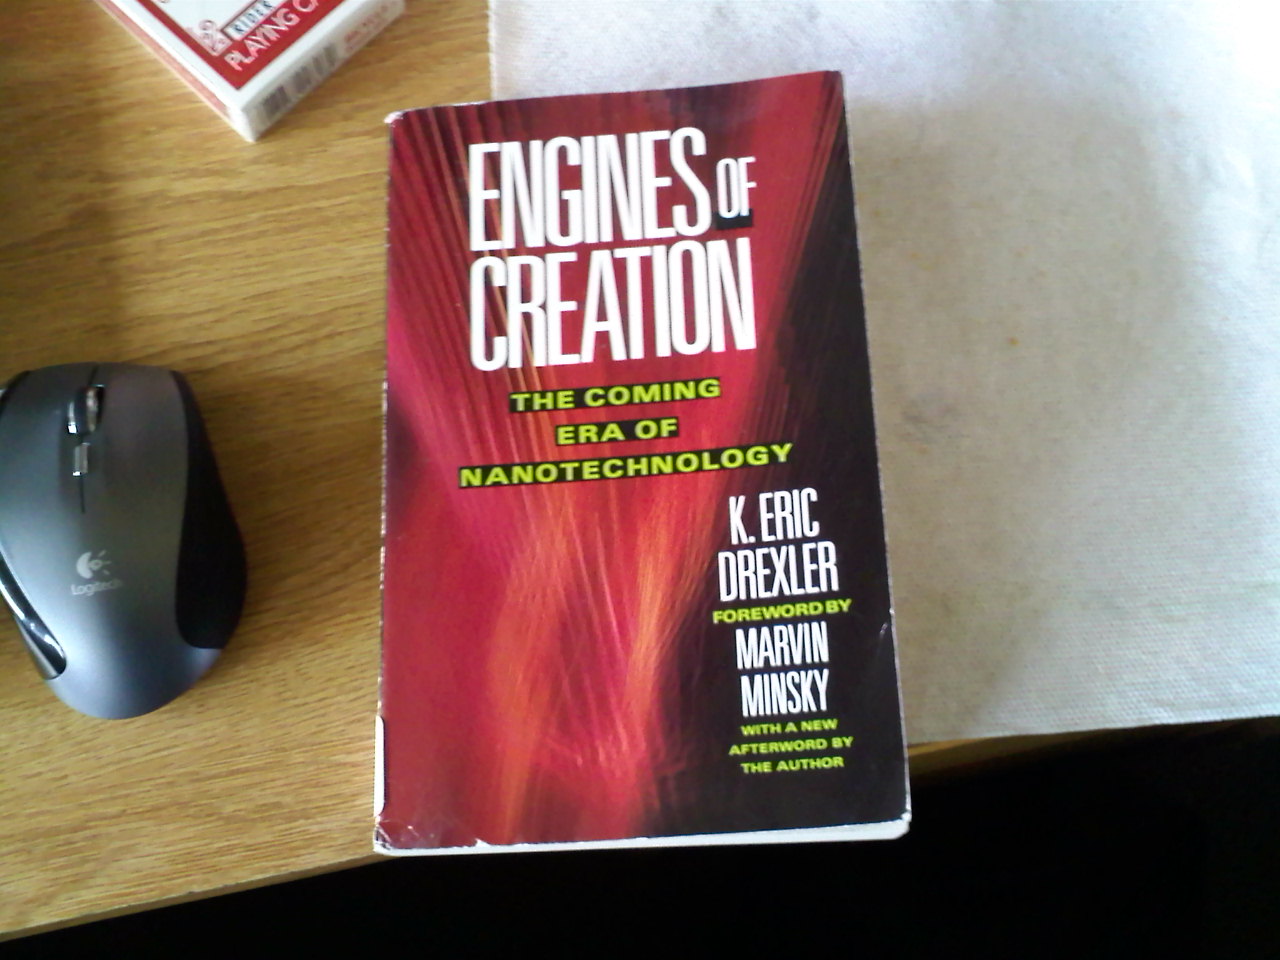 Drexler's Engines of Creation